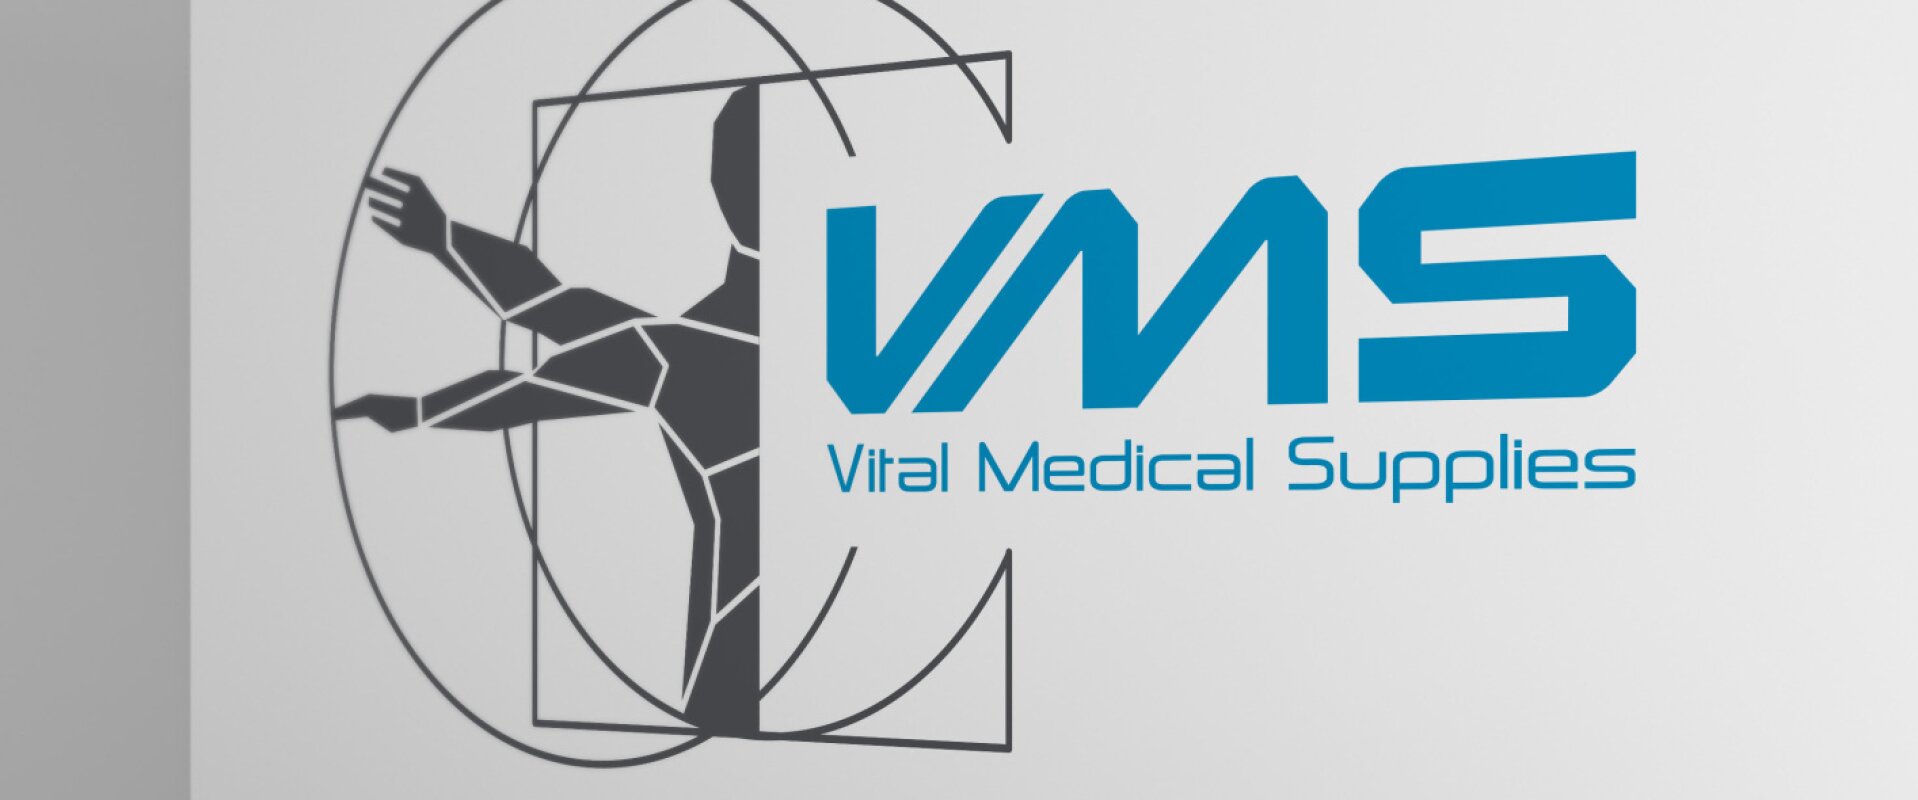 VMS Vital Medical Supplies. #3